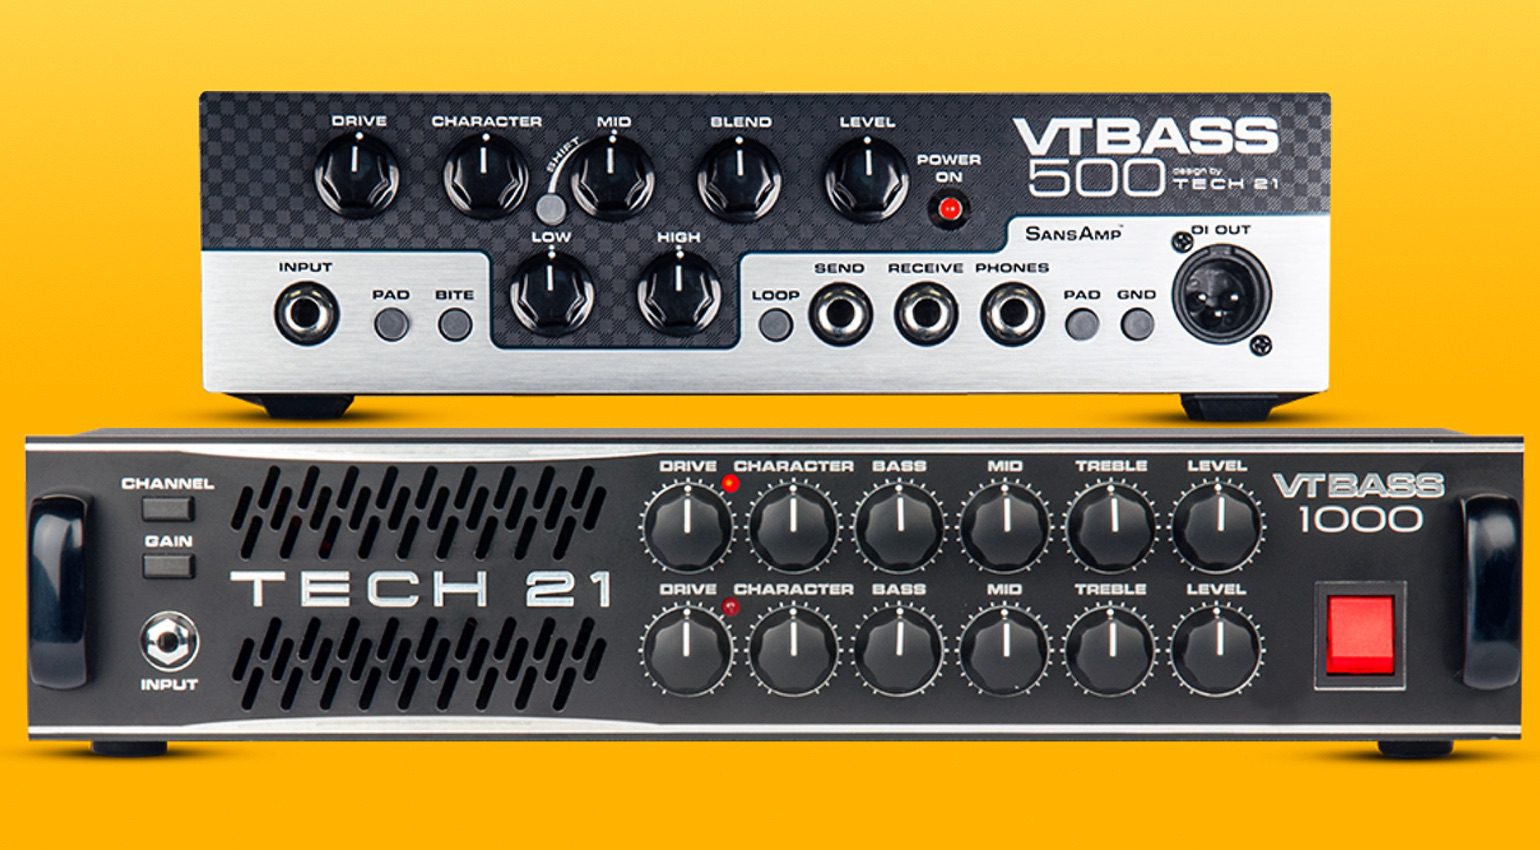 Басс 21. Tech 21 VT Bass v2. VT Bass. Usritli Bass 500 Watt. Tech 21 VT отзывы.